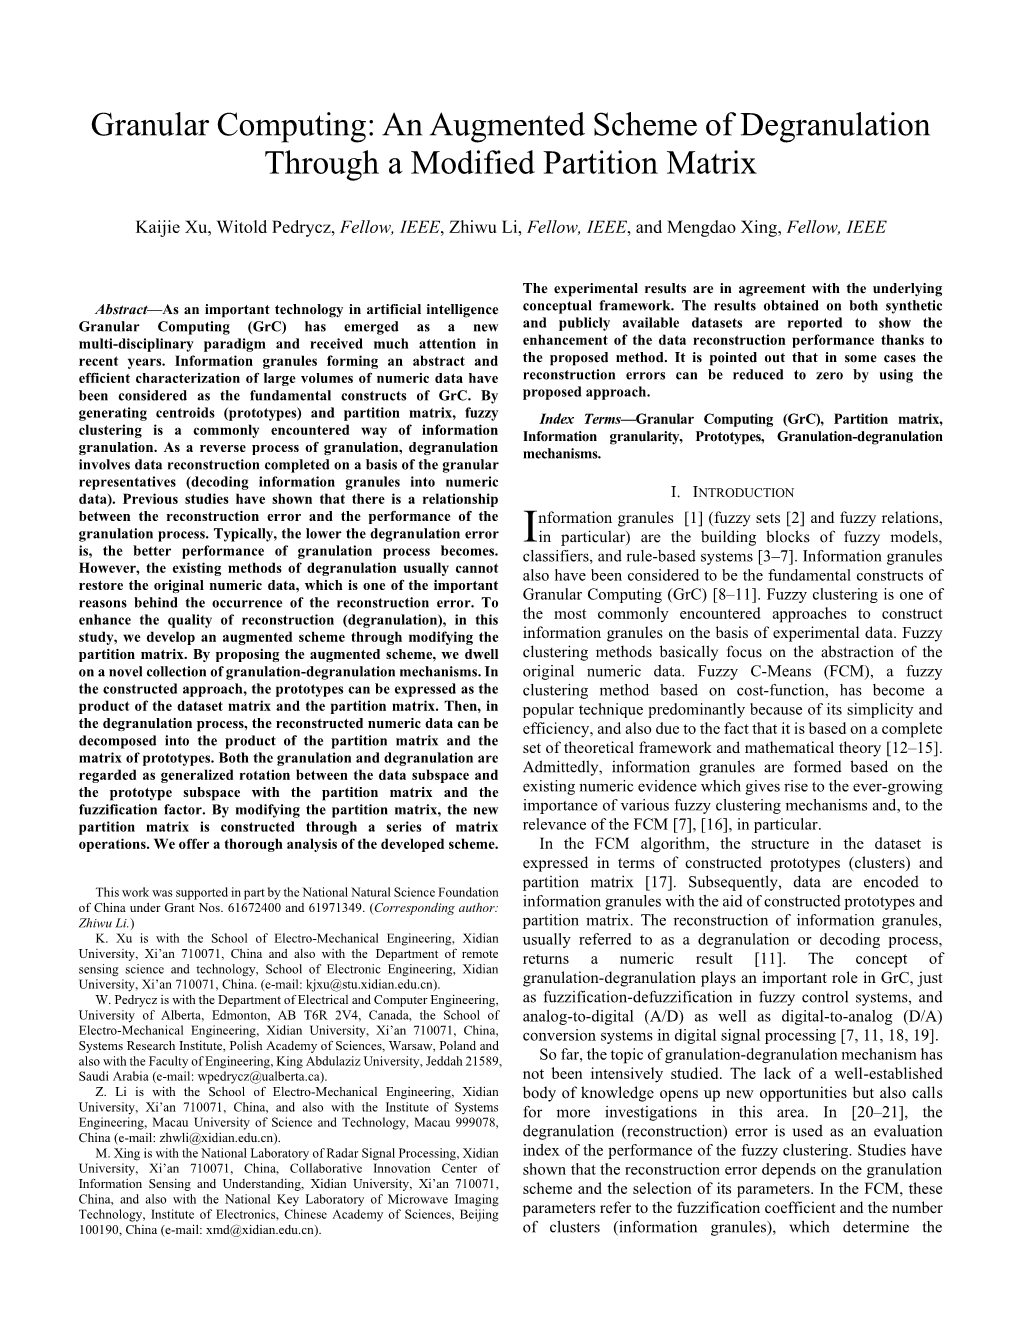 Granular Computing: an Augmented Scheme of Degranulation Through a Modified Partition Matrix